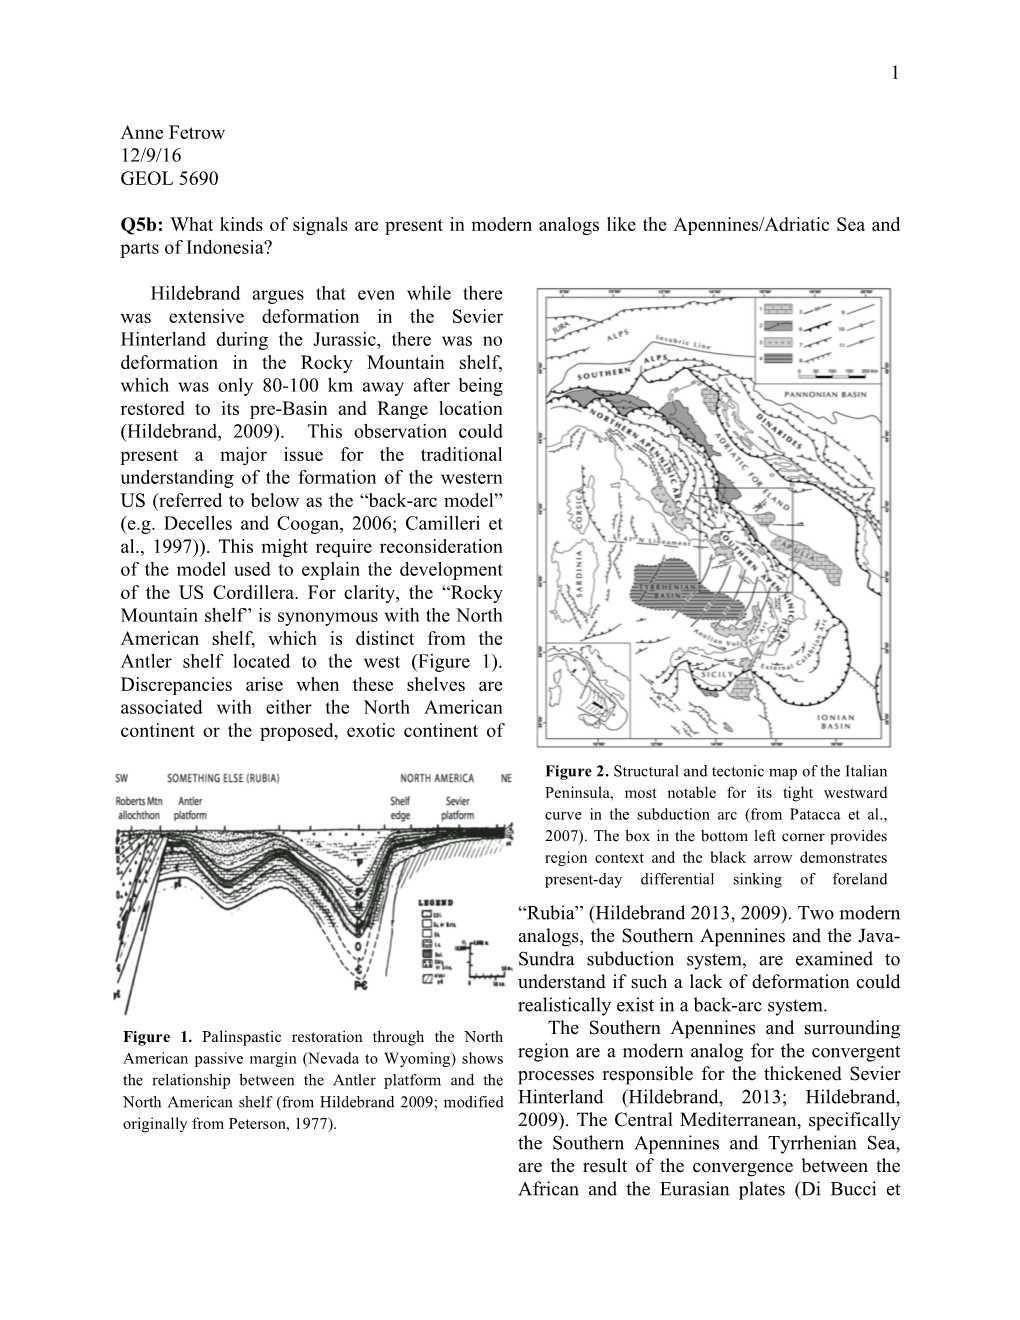 Q5. Modern Analogs of the US Cordillera. Fetrow. Final